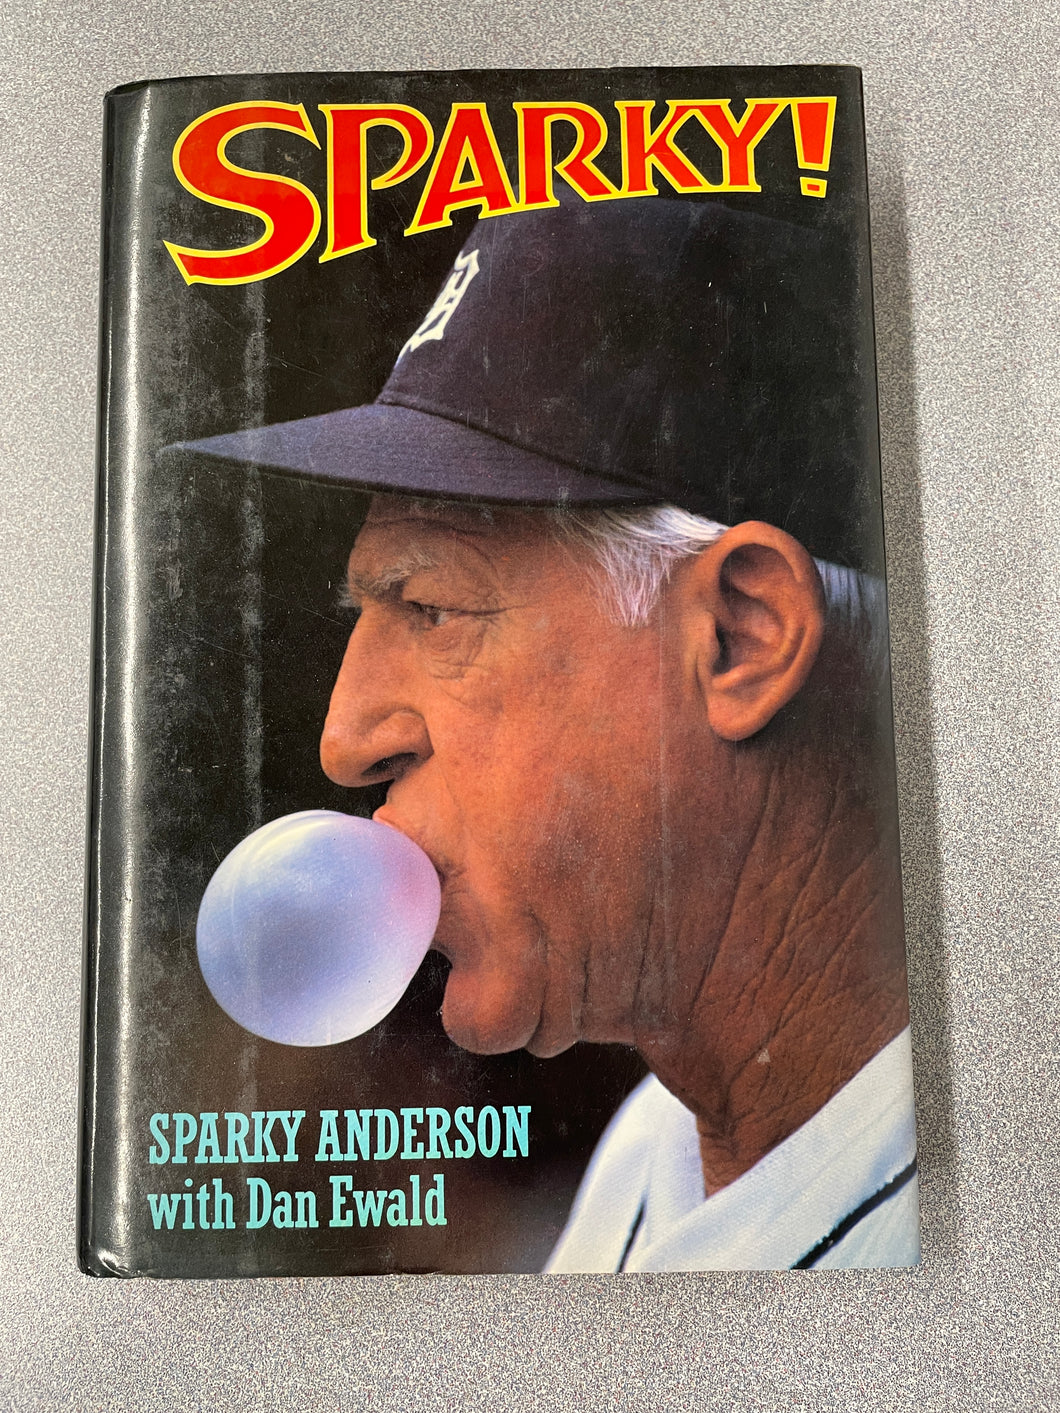 Sparky!, Anderson, Sparky and Dan Ewald [1990] BI 11/23